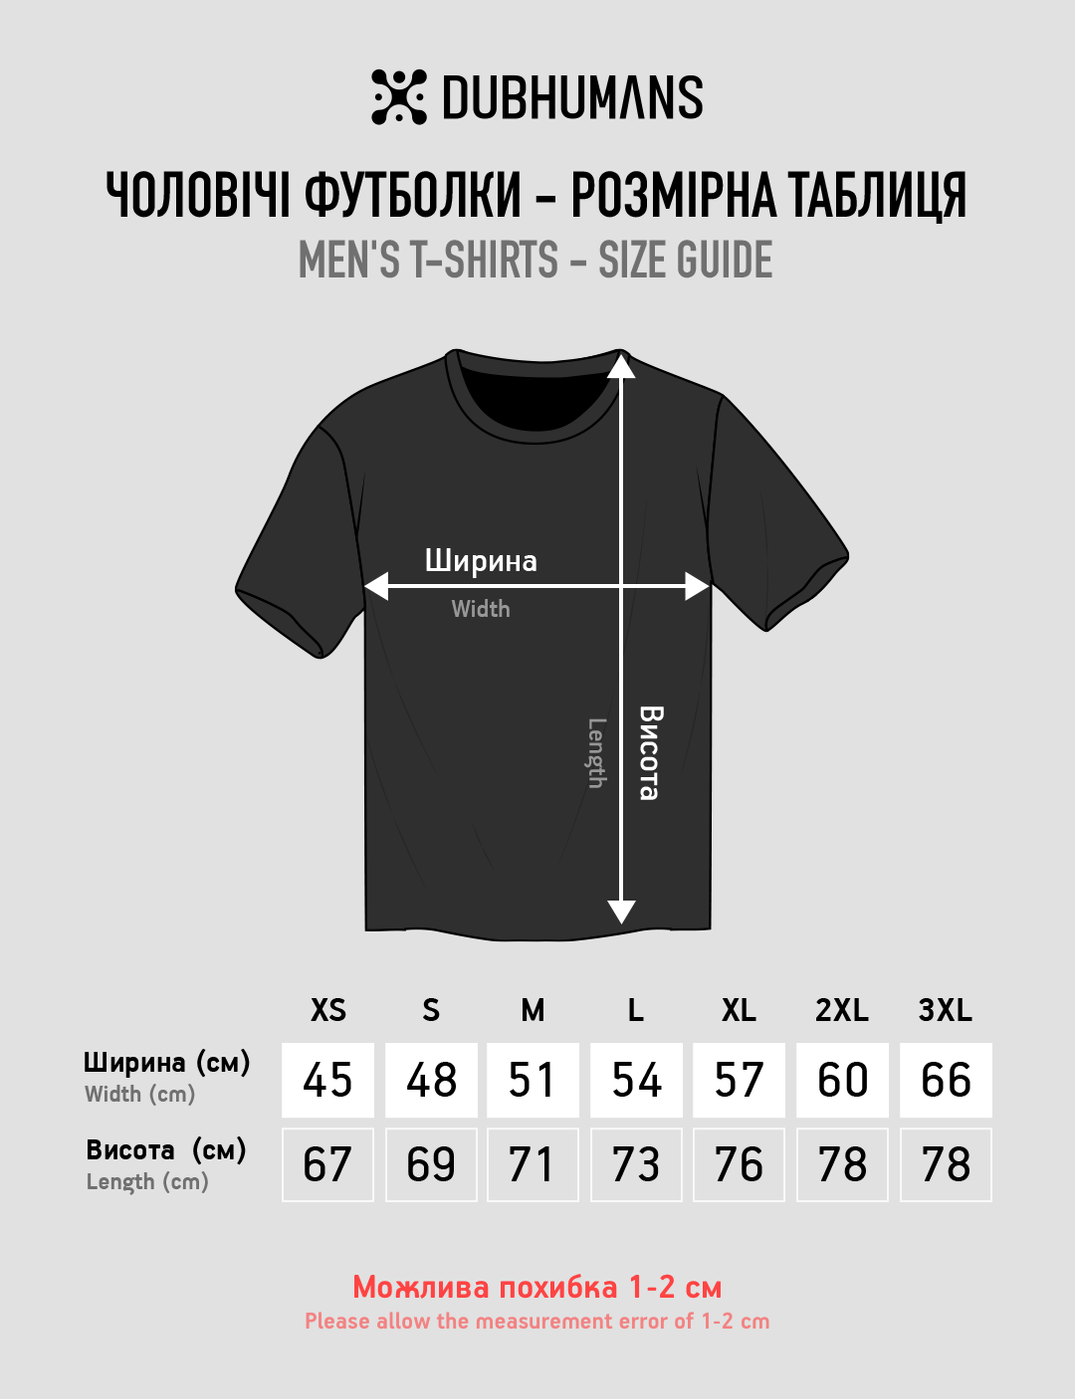 Men's Funny T-shirt “Floppy Grandfa”, Black, M